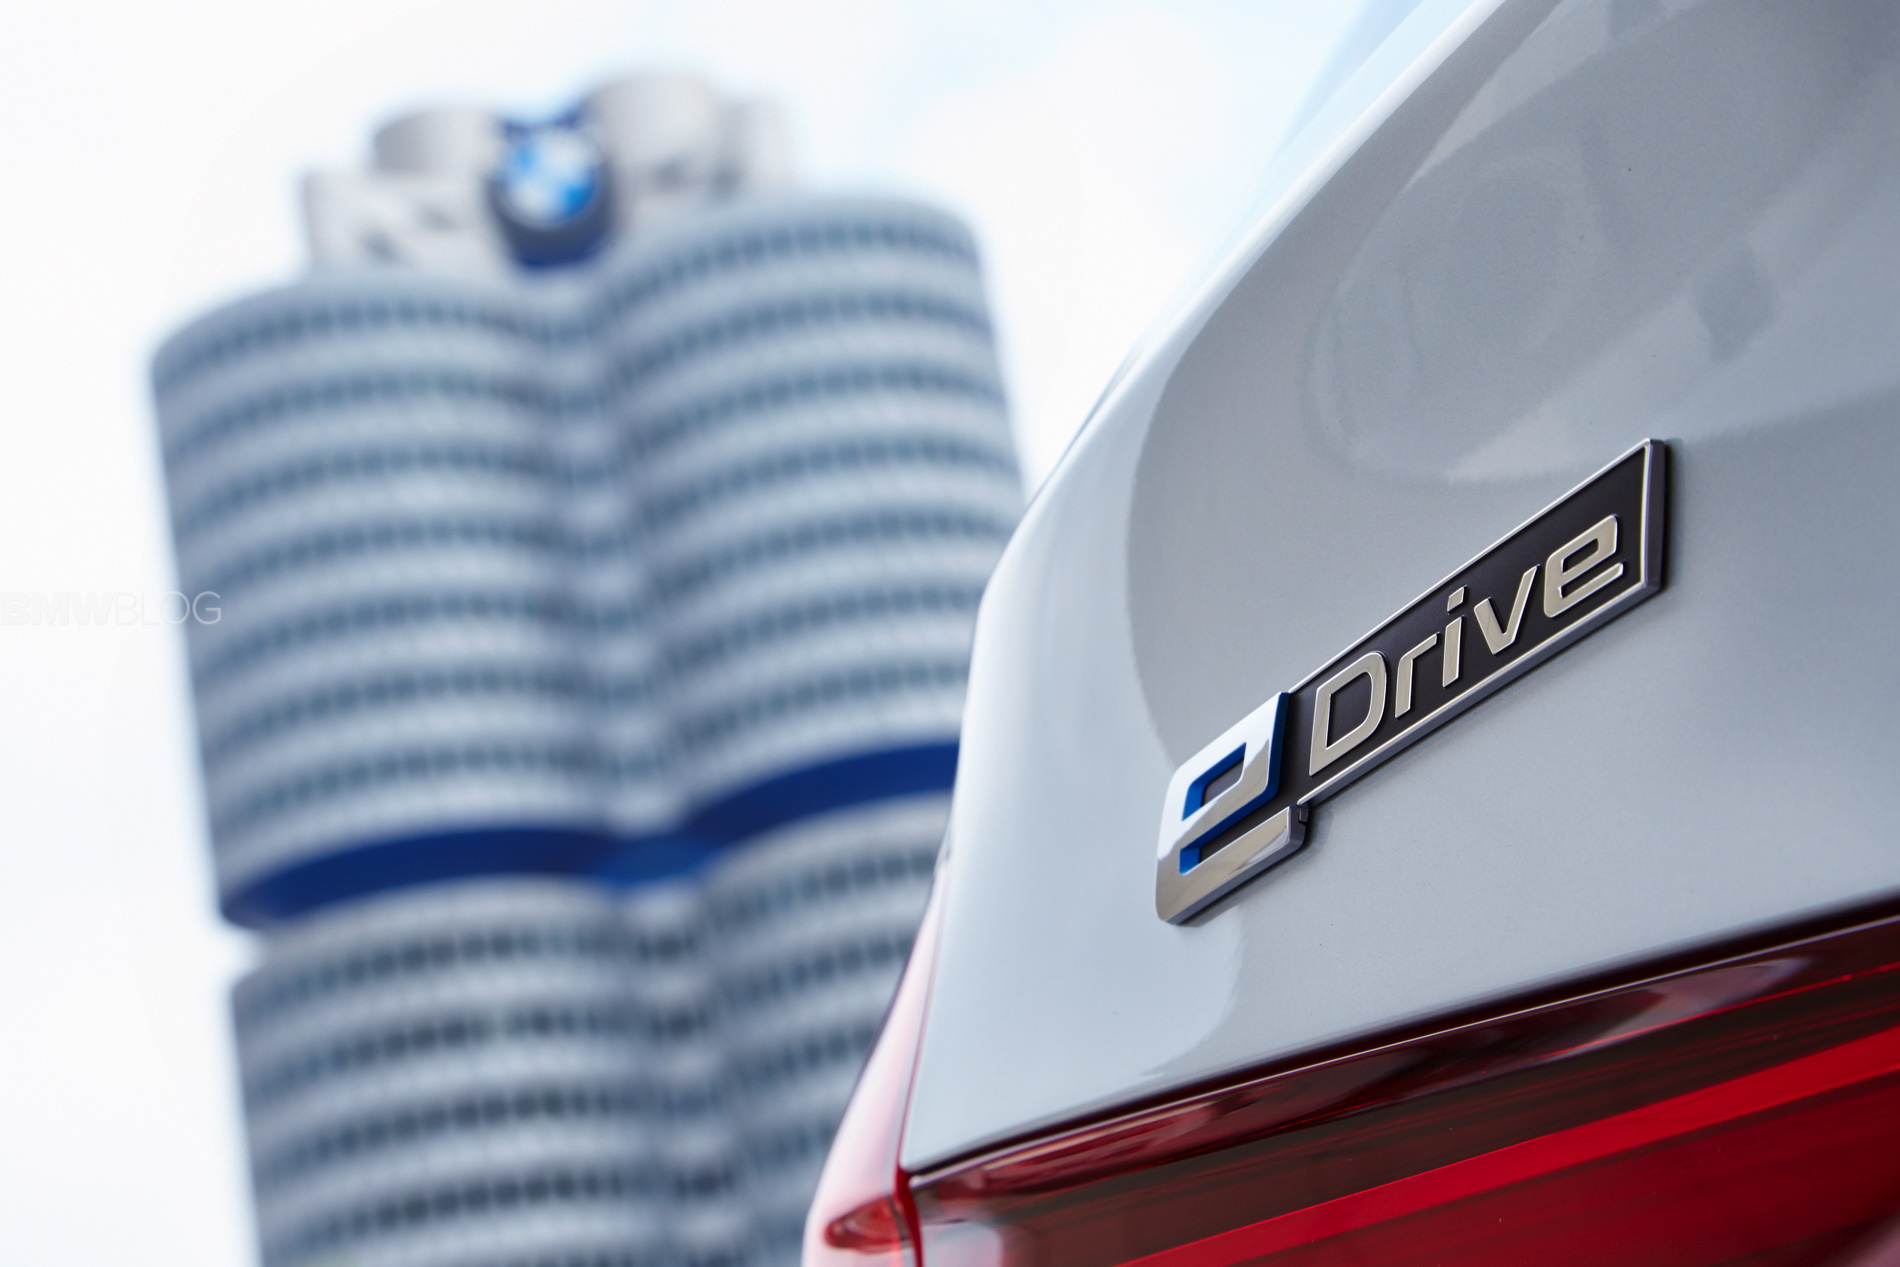 BMW X5 eDrive plug in hybrid 1900x1200 92